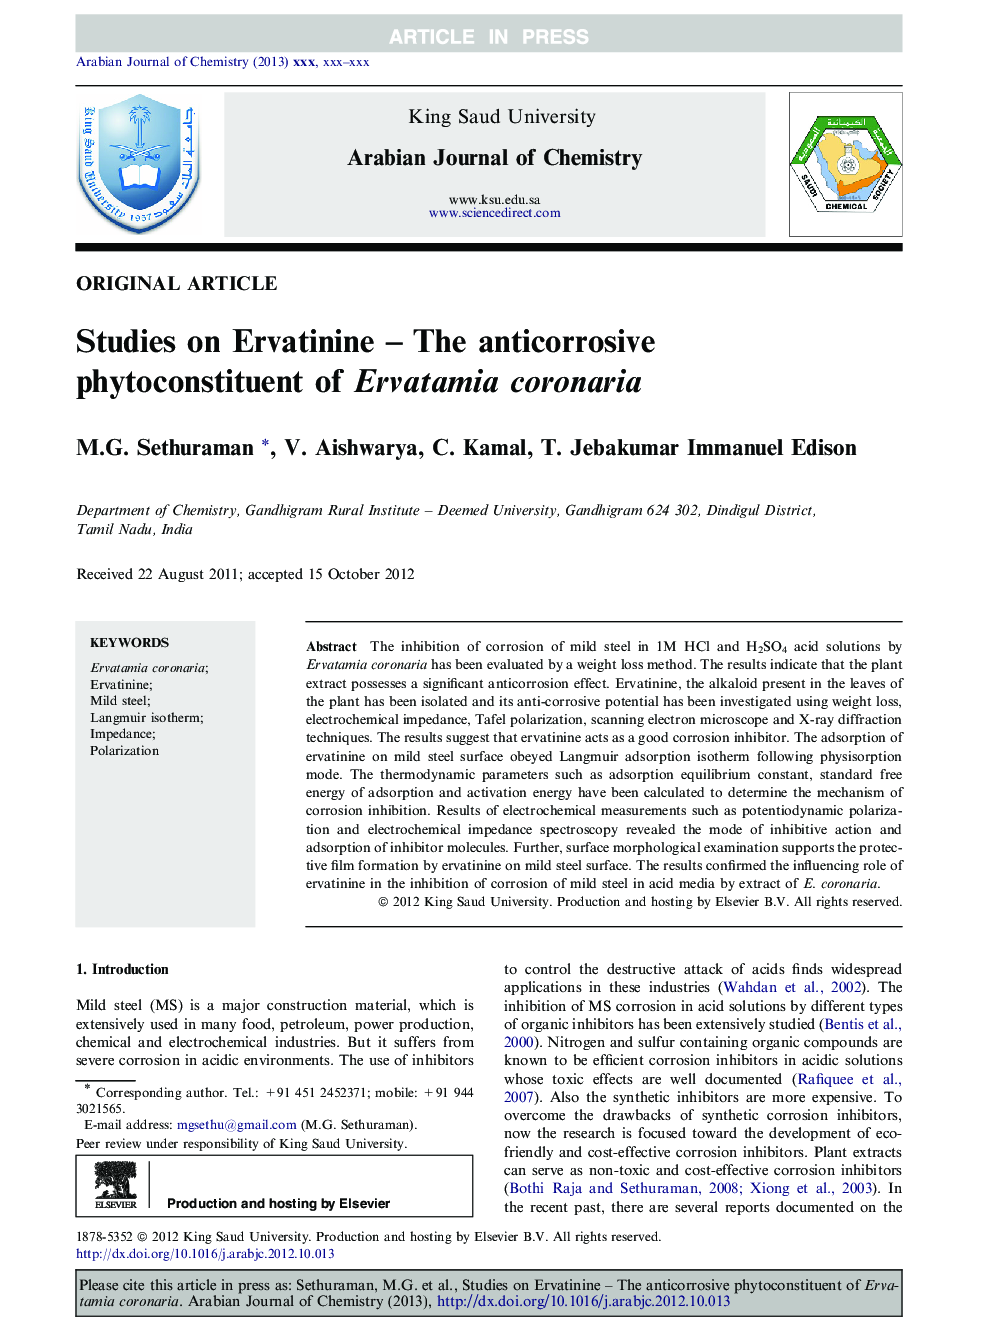 Studies on Ervatinine - The anticorrosive phytoconstituent of Ervatamia coronaria